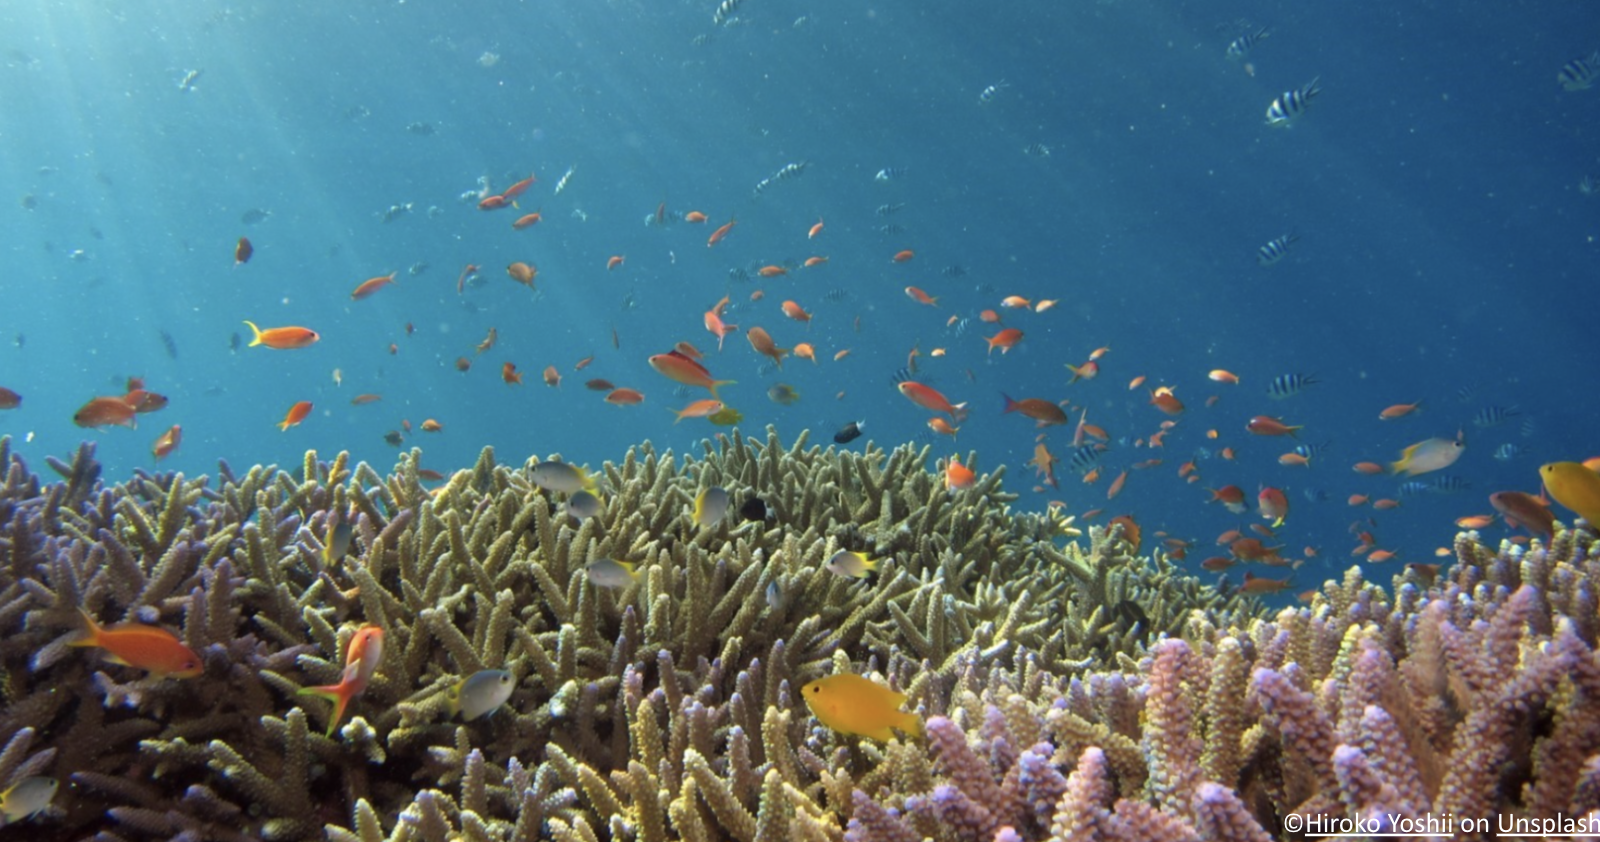 Top 6 Reef Safe Sunscreens